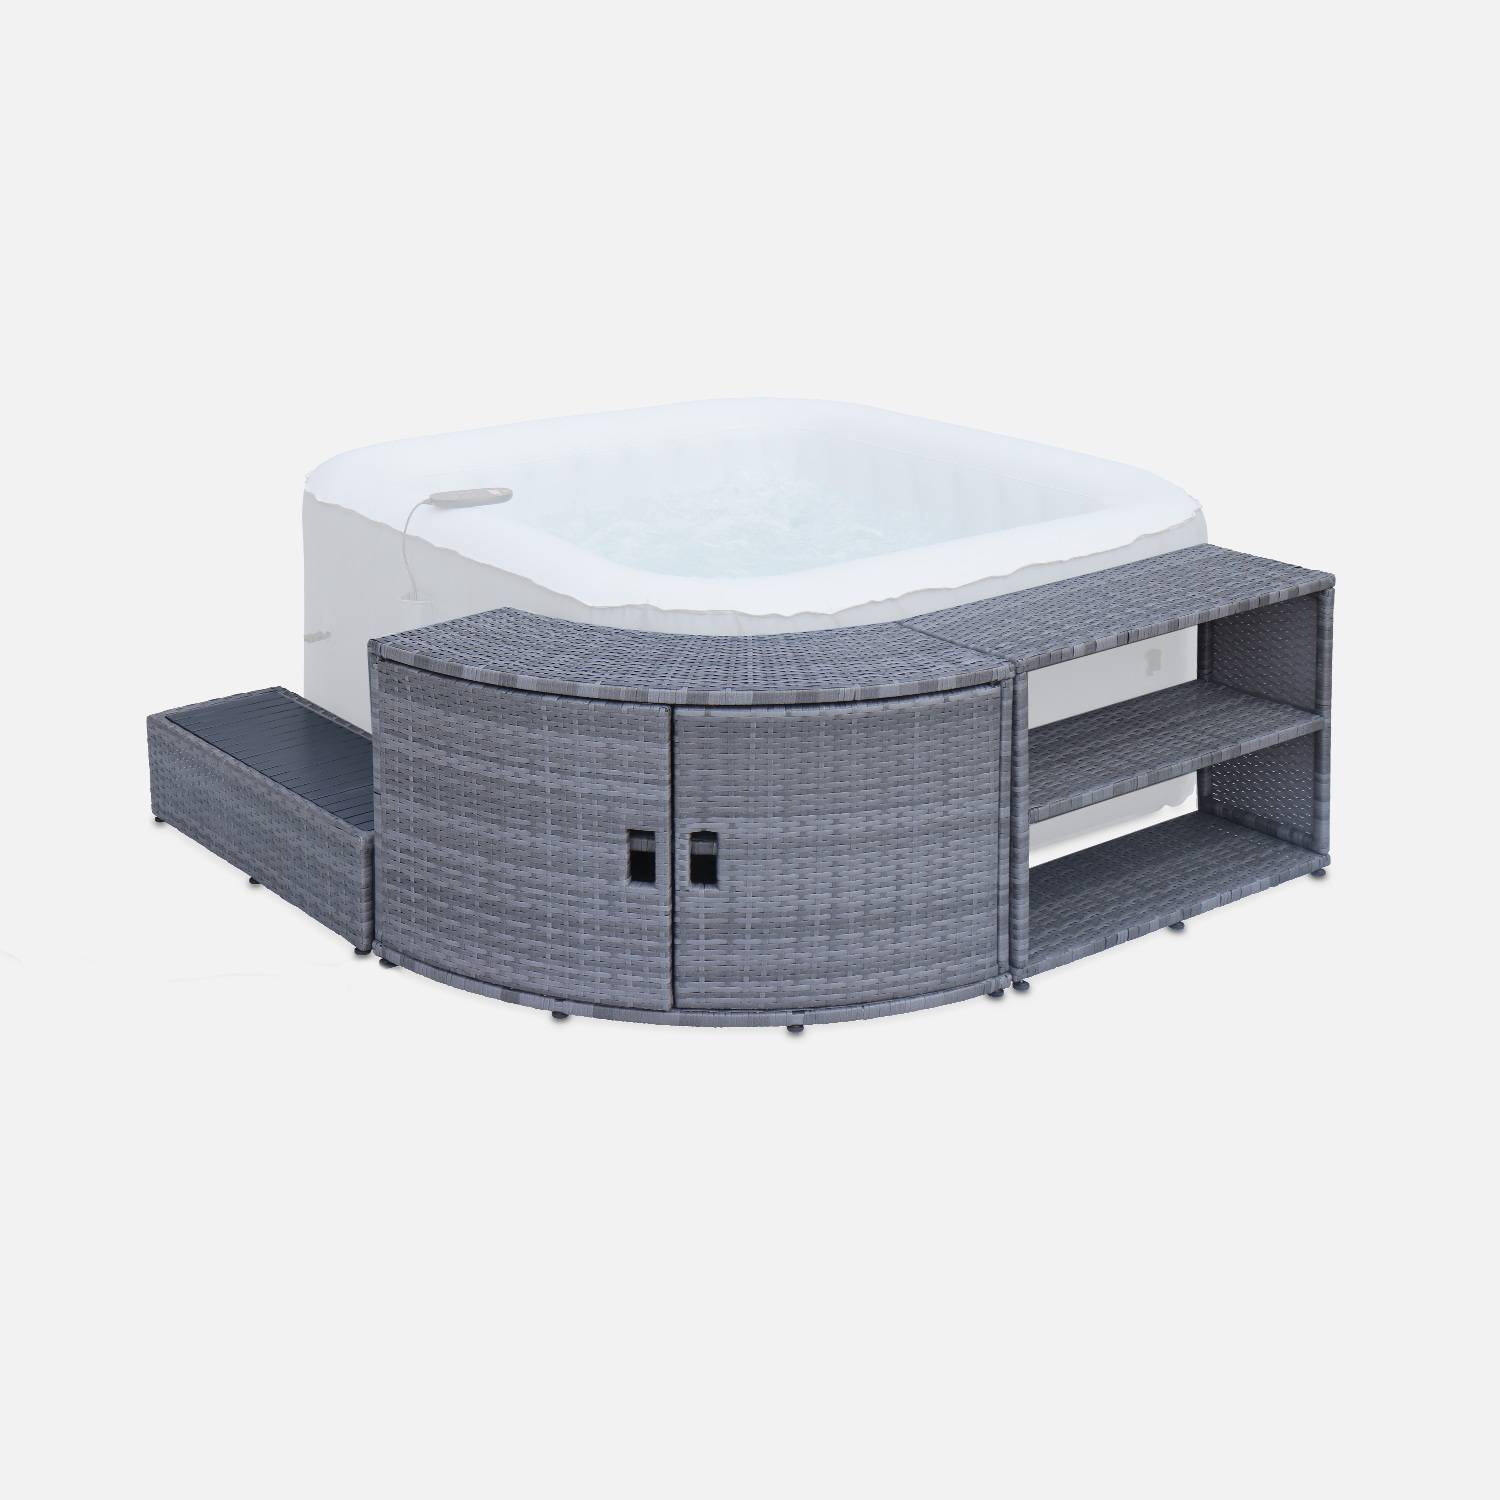 Grey polyrattan surround for square hot tub | sweeek